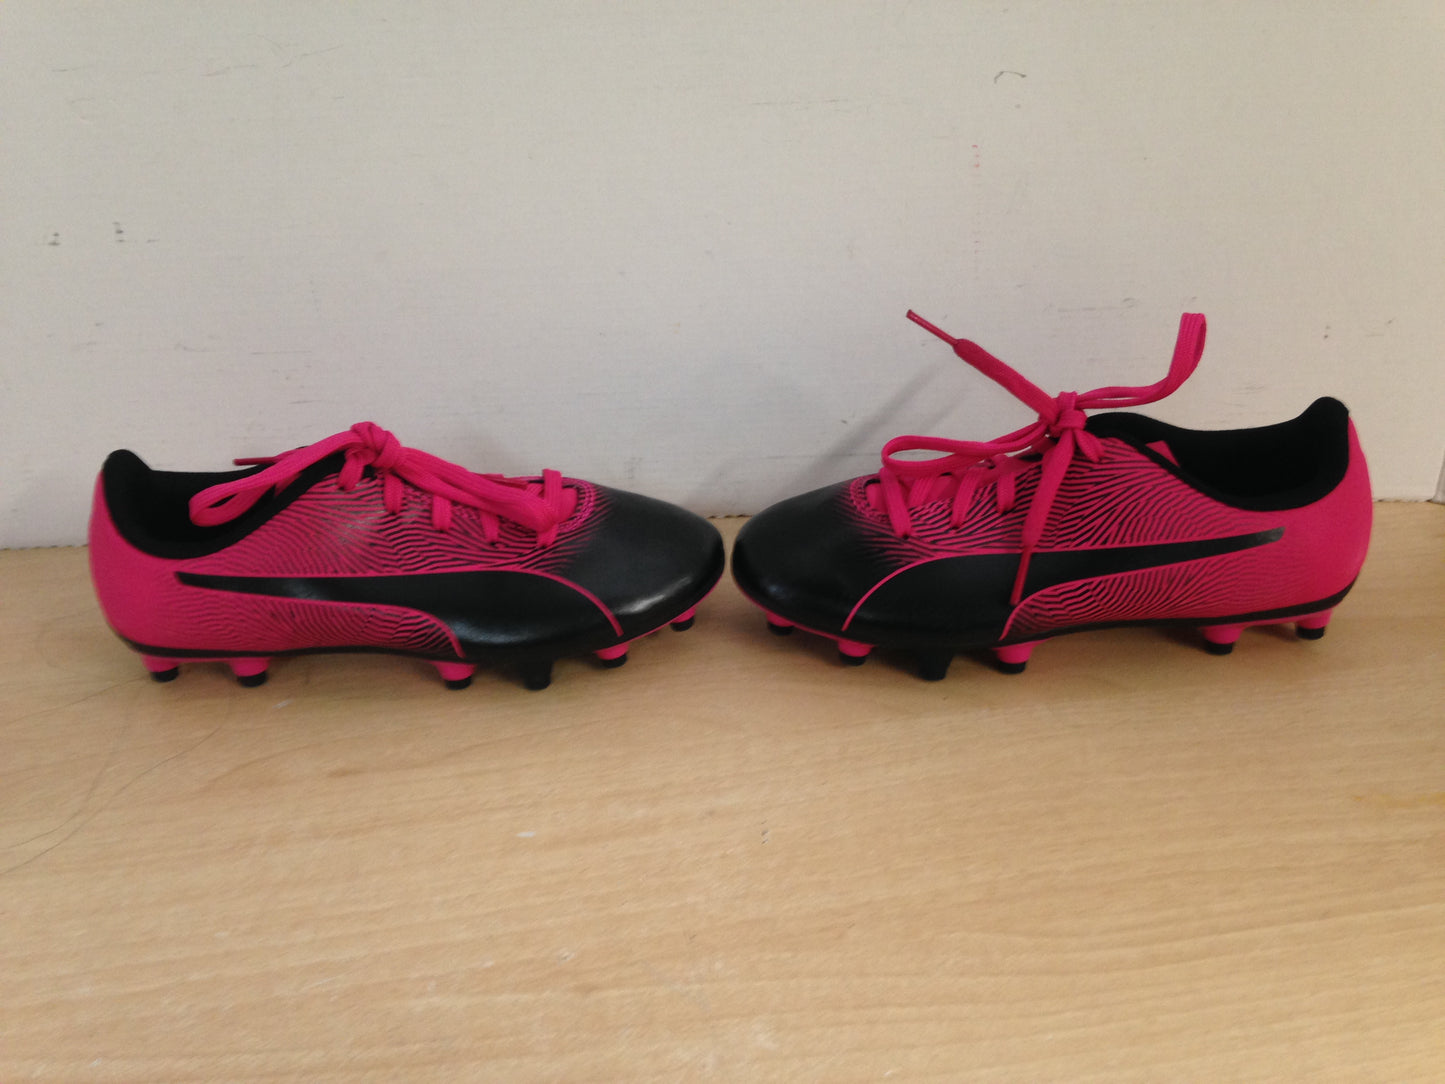 Soccer Shoes Cleats Child Size 13 Puma Pink Black Excellent